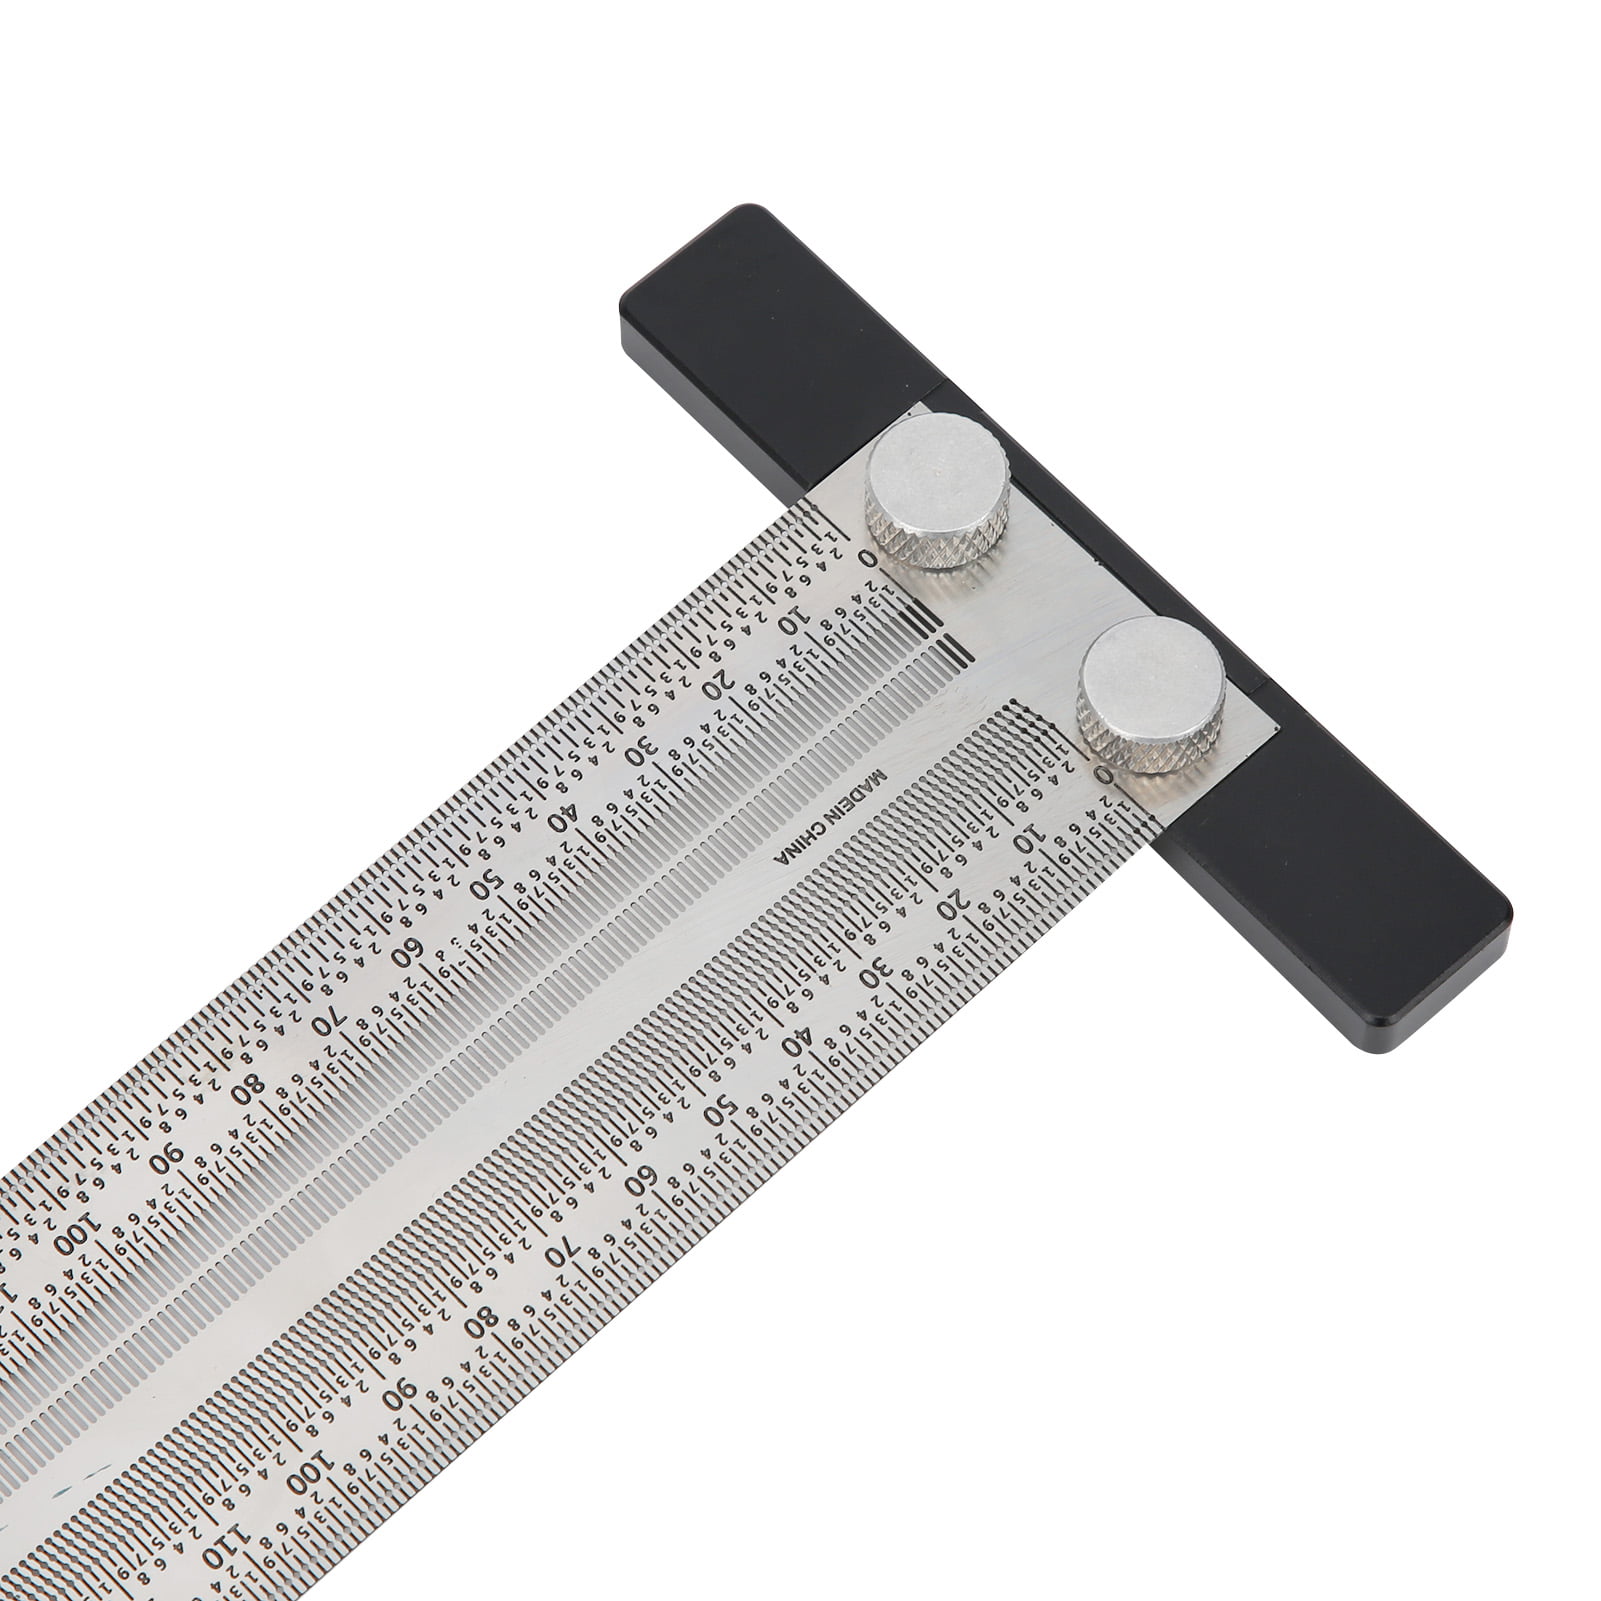 300mm Scale Ruler Set Small Large Measure Rule Metal A1T8 Steel Stainless Y H1N7 